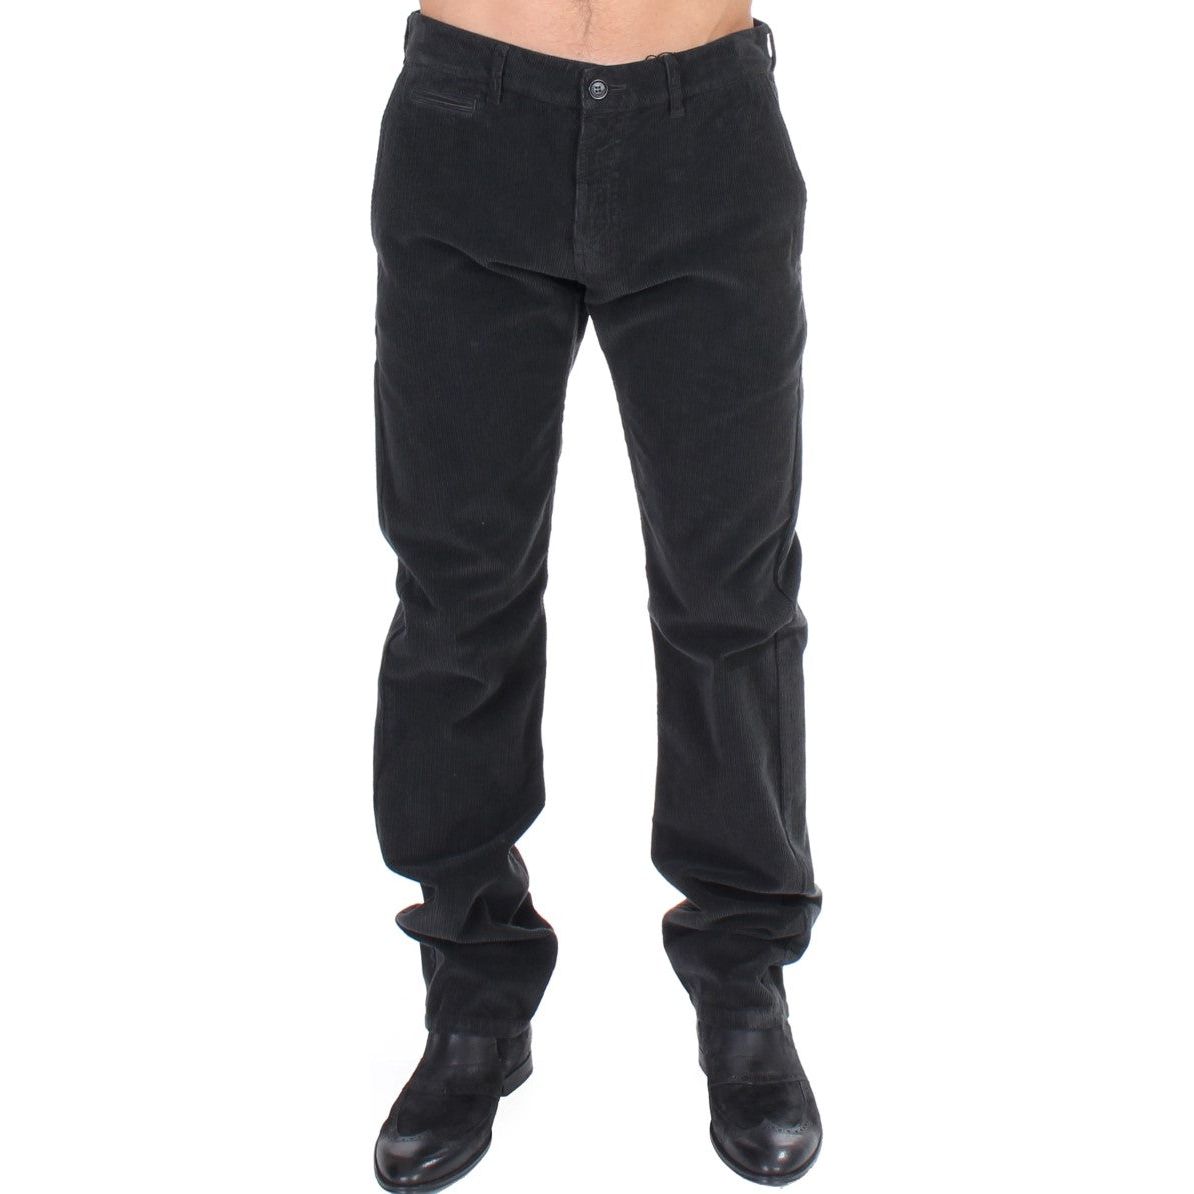 GF Ferre Elegant Black Cotton Corduroy Pants black-corduroy-cotton-straight-fit-pants Jeans & Pants 53278-black-corduroy-cotton-straight-fit-pants.jpg